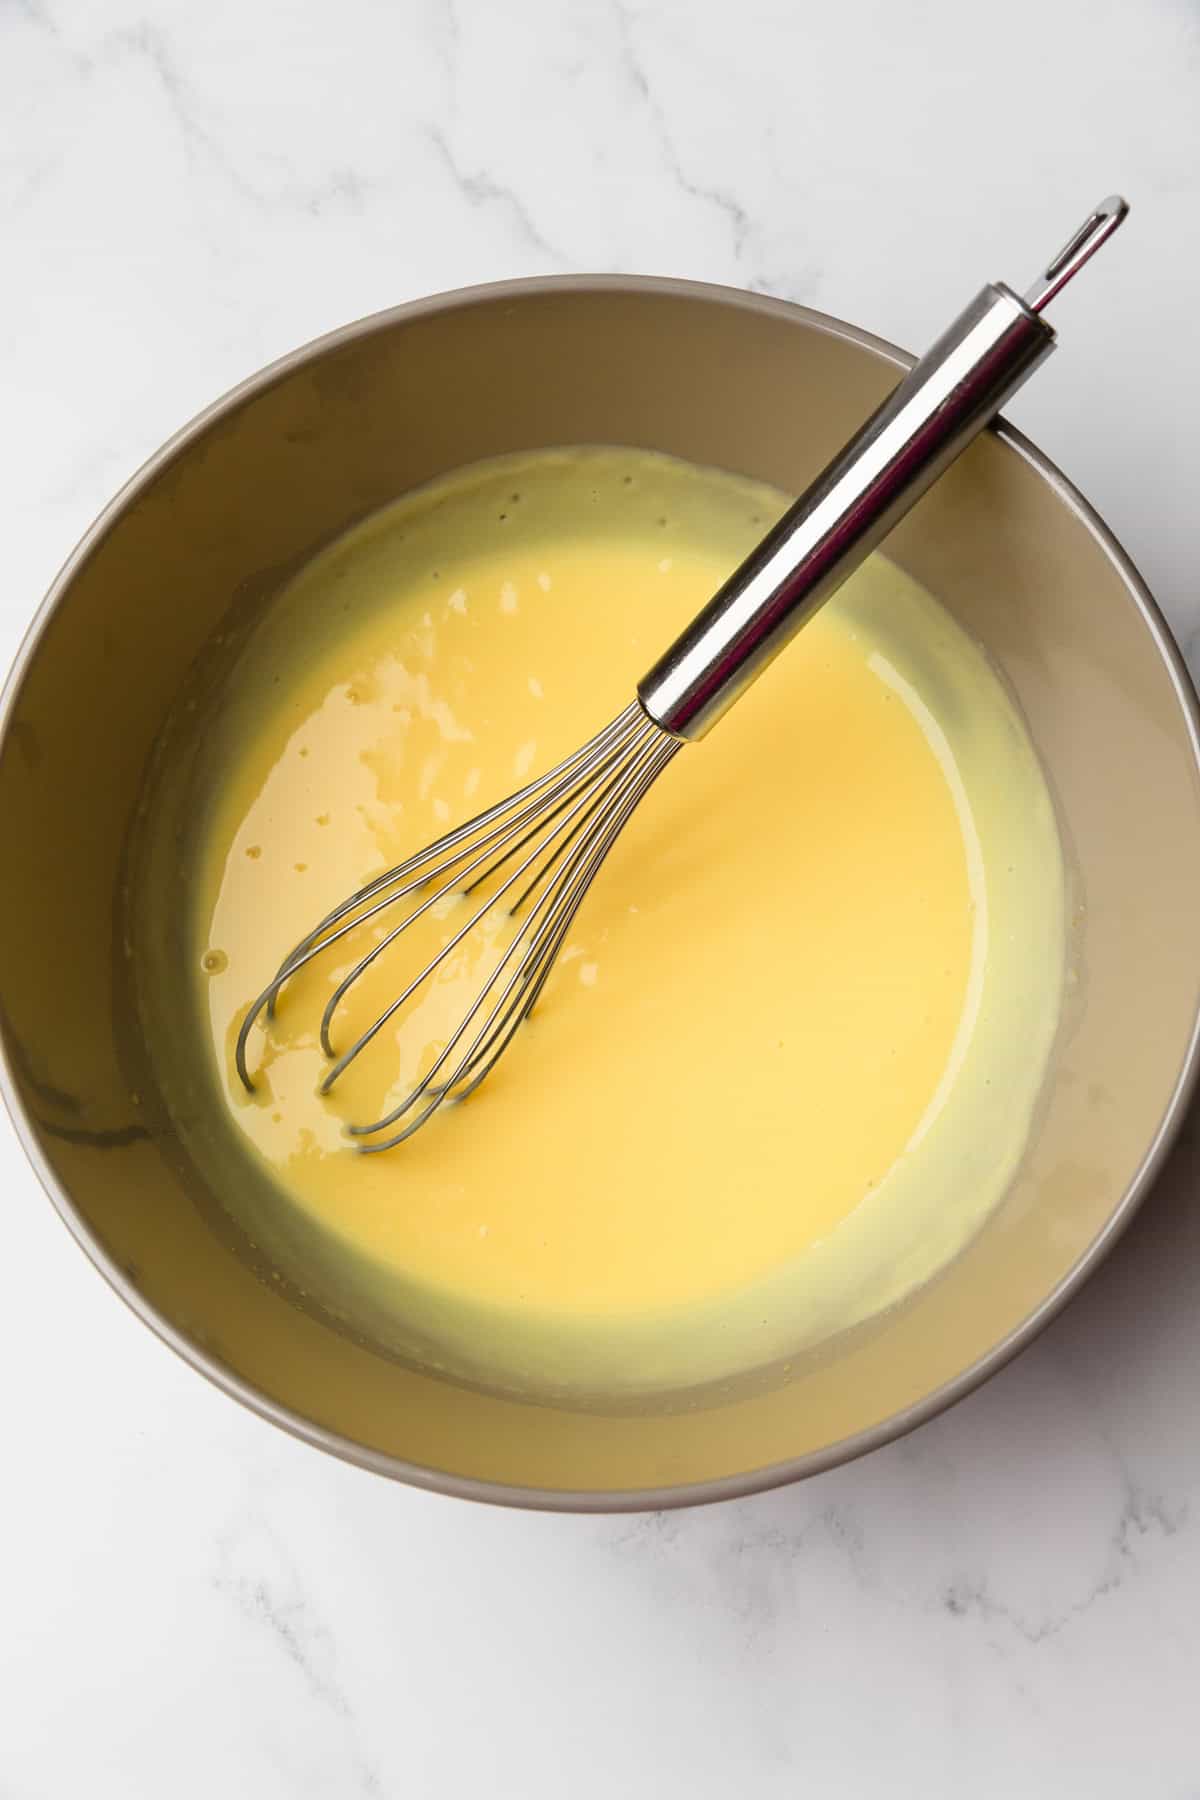 Making vanilla pudding.